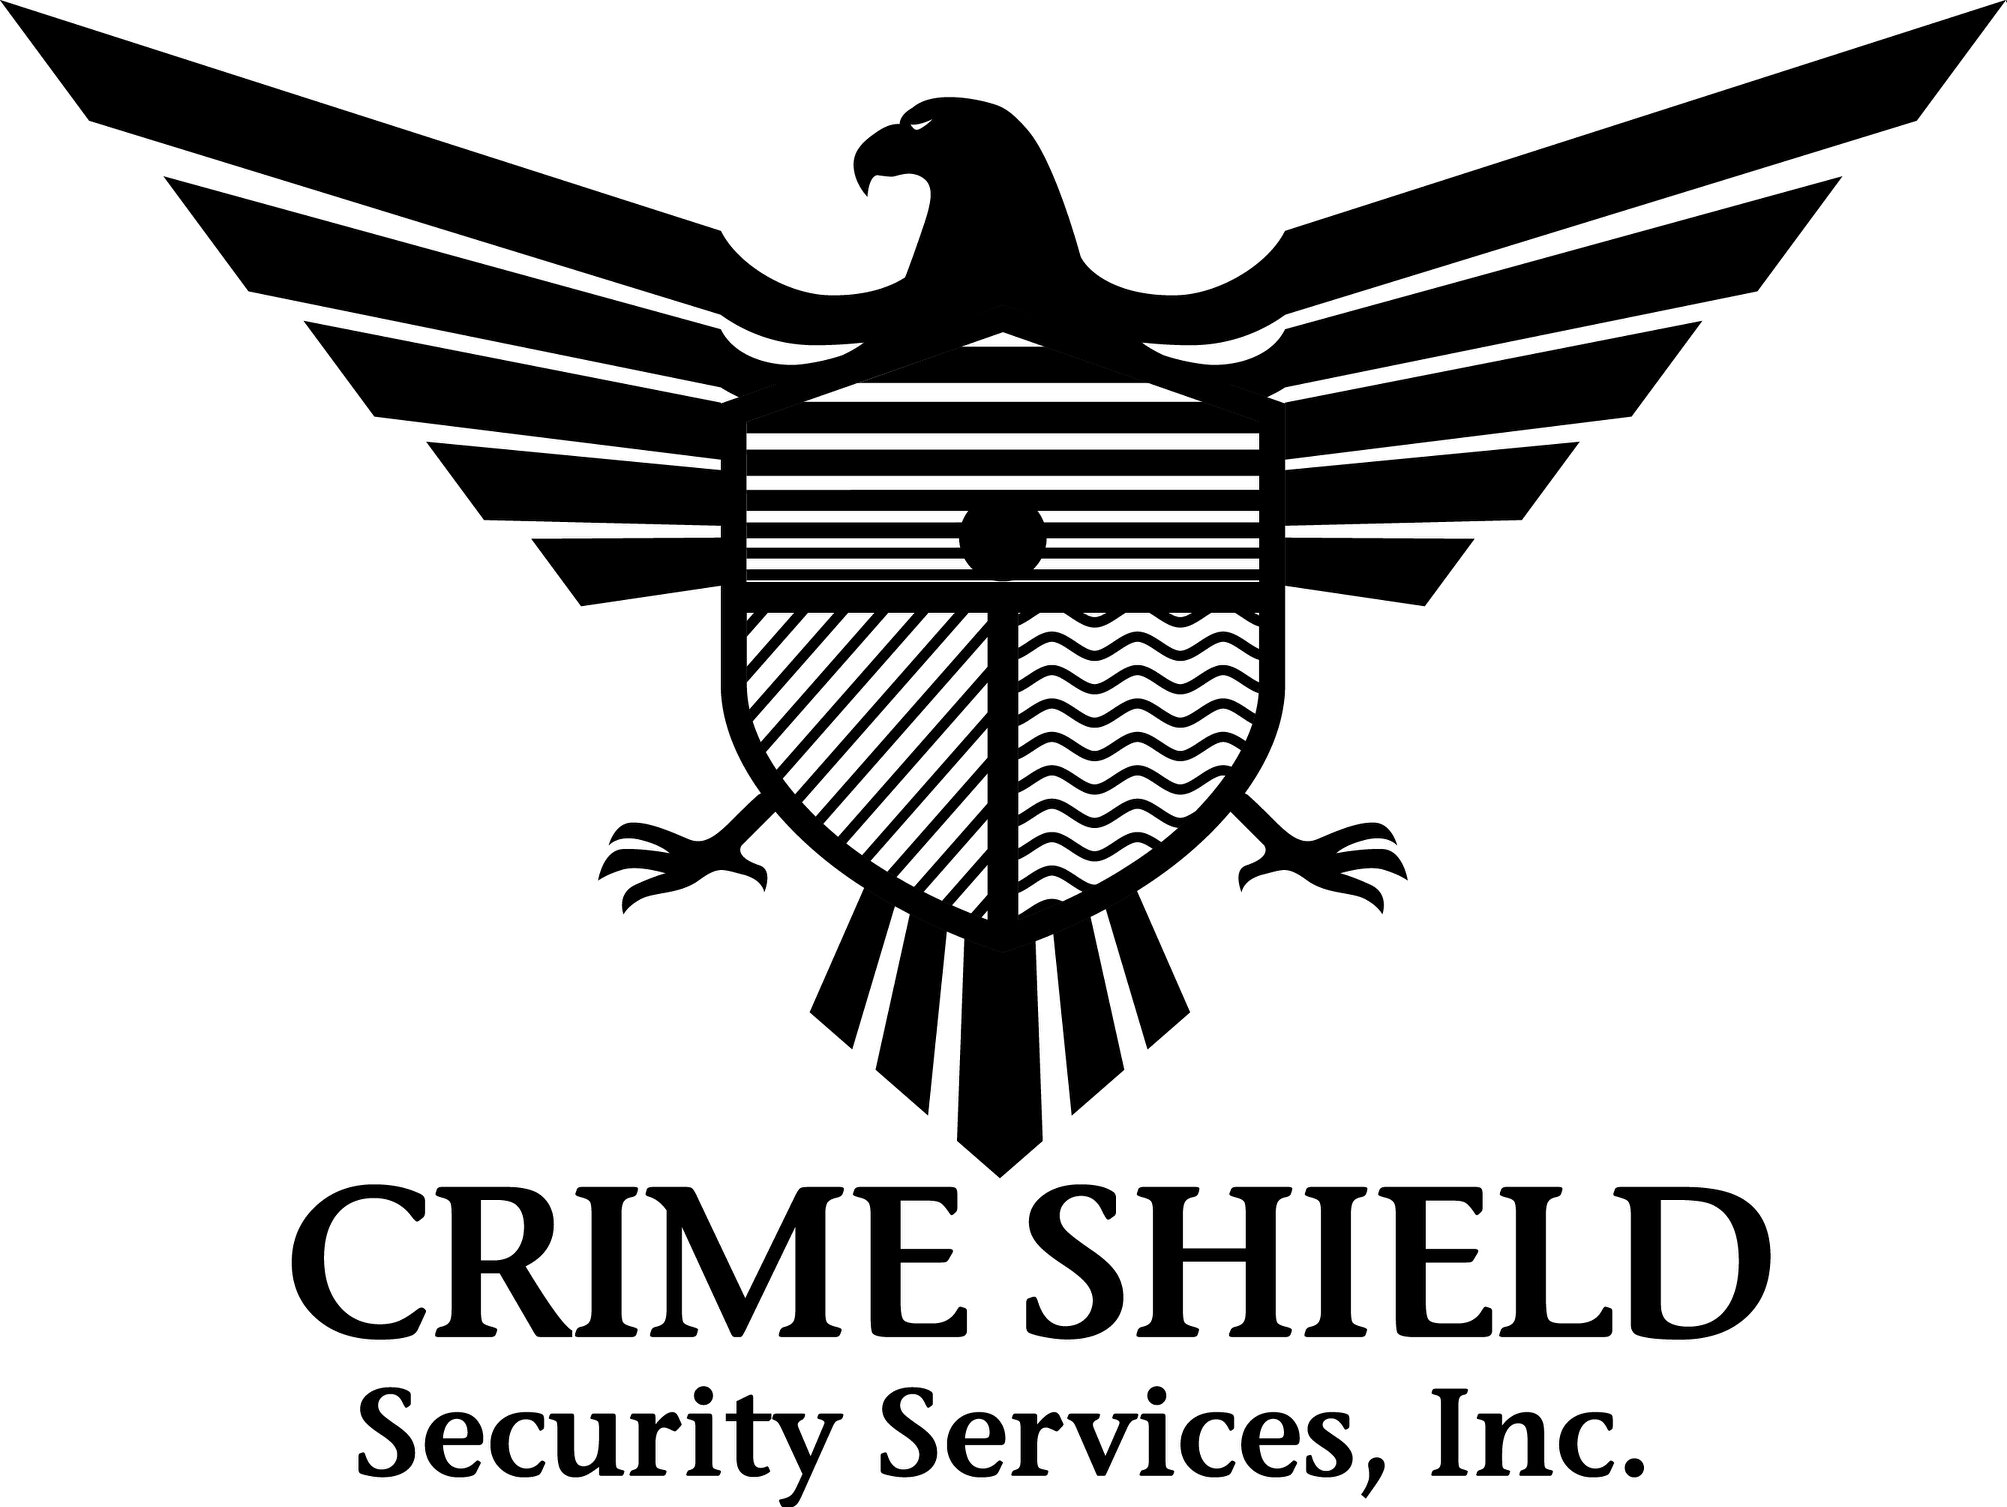 Crimeshiled Security Services, Inc.